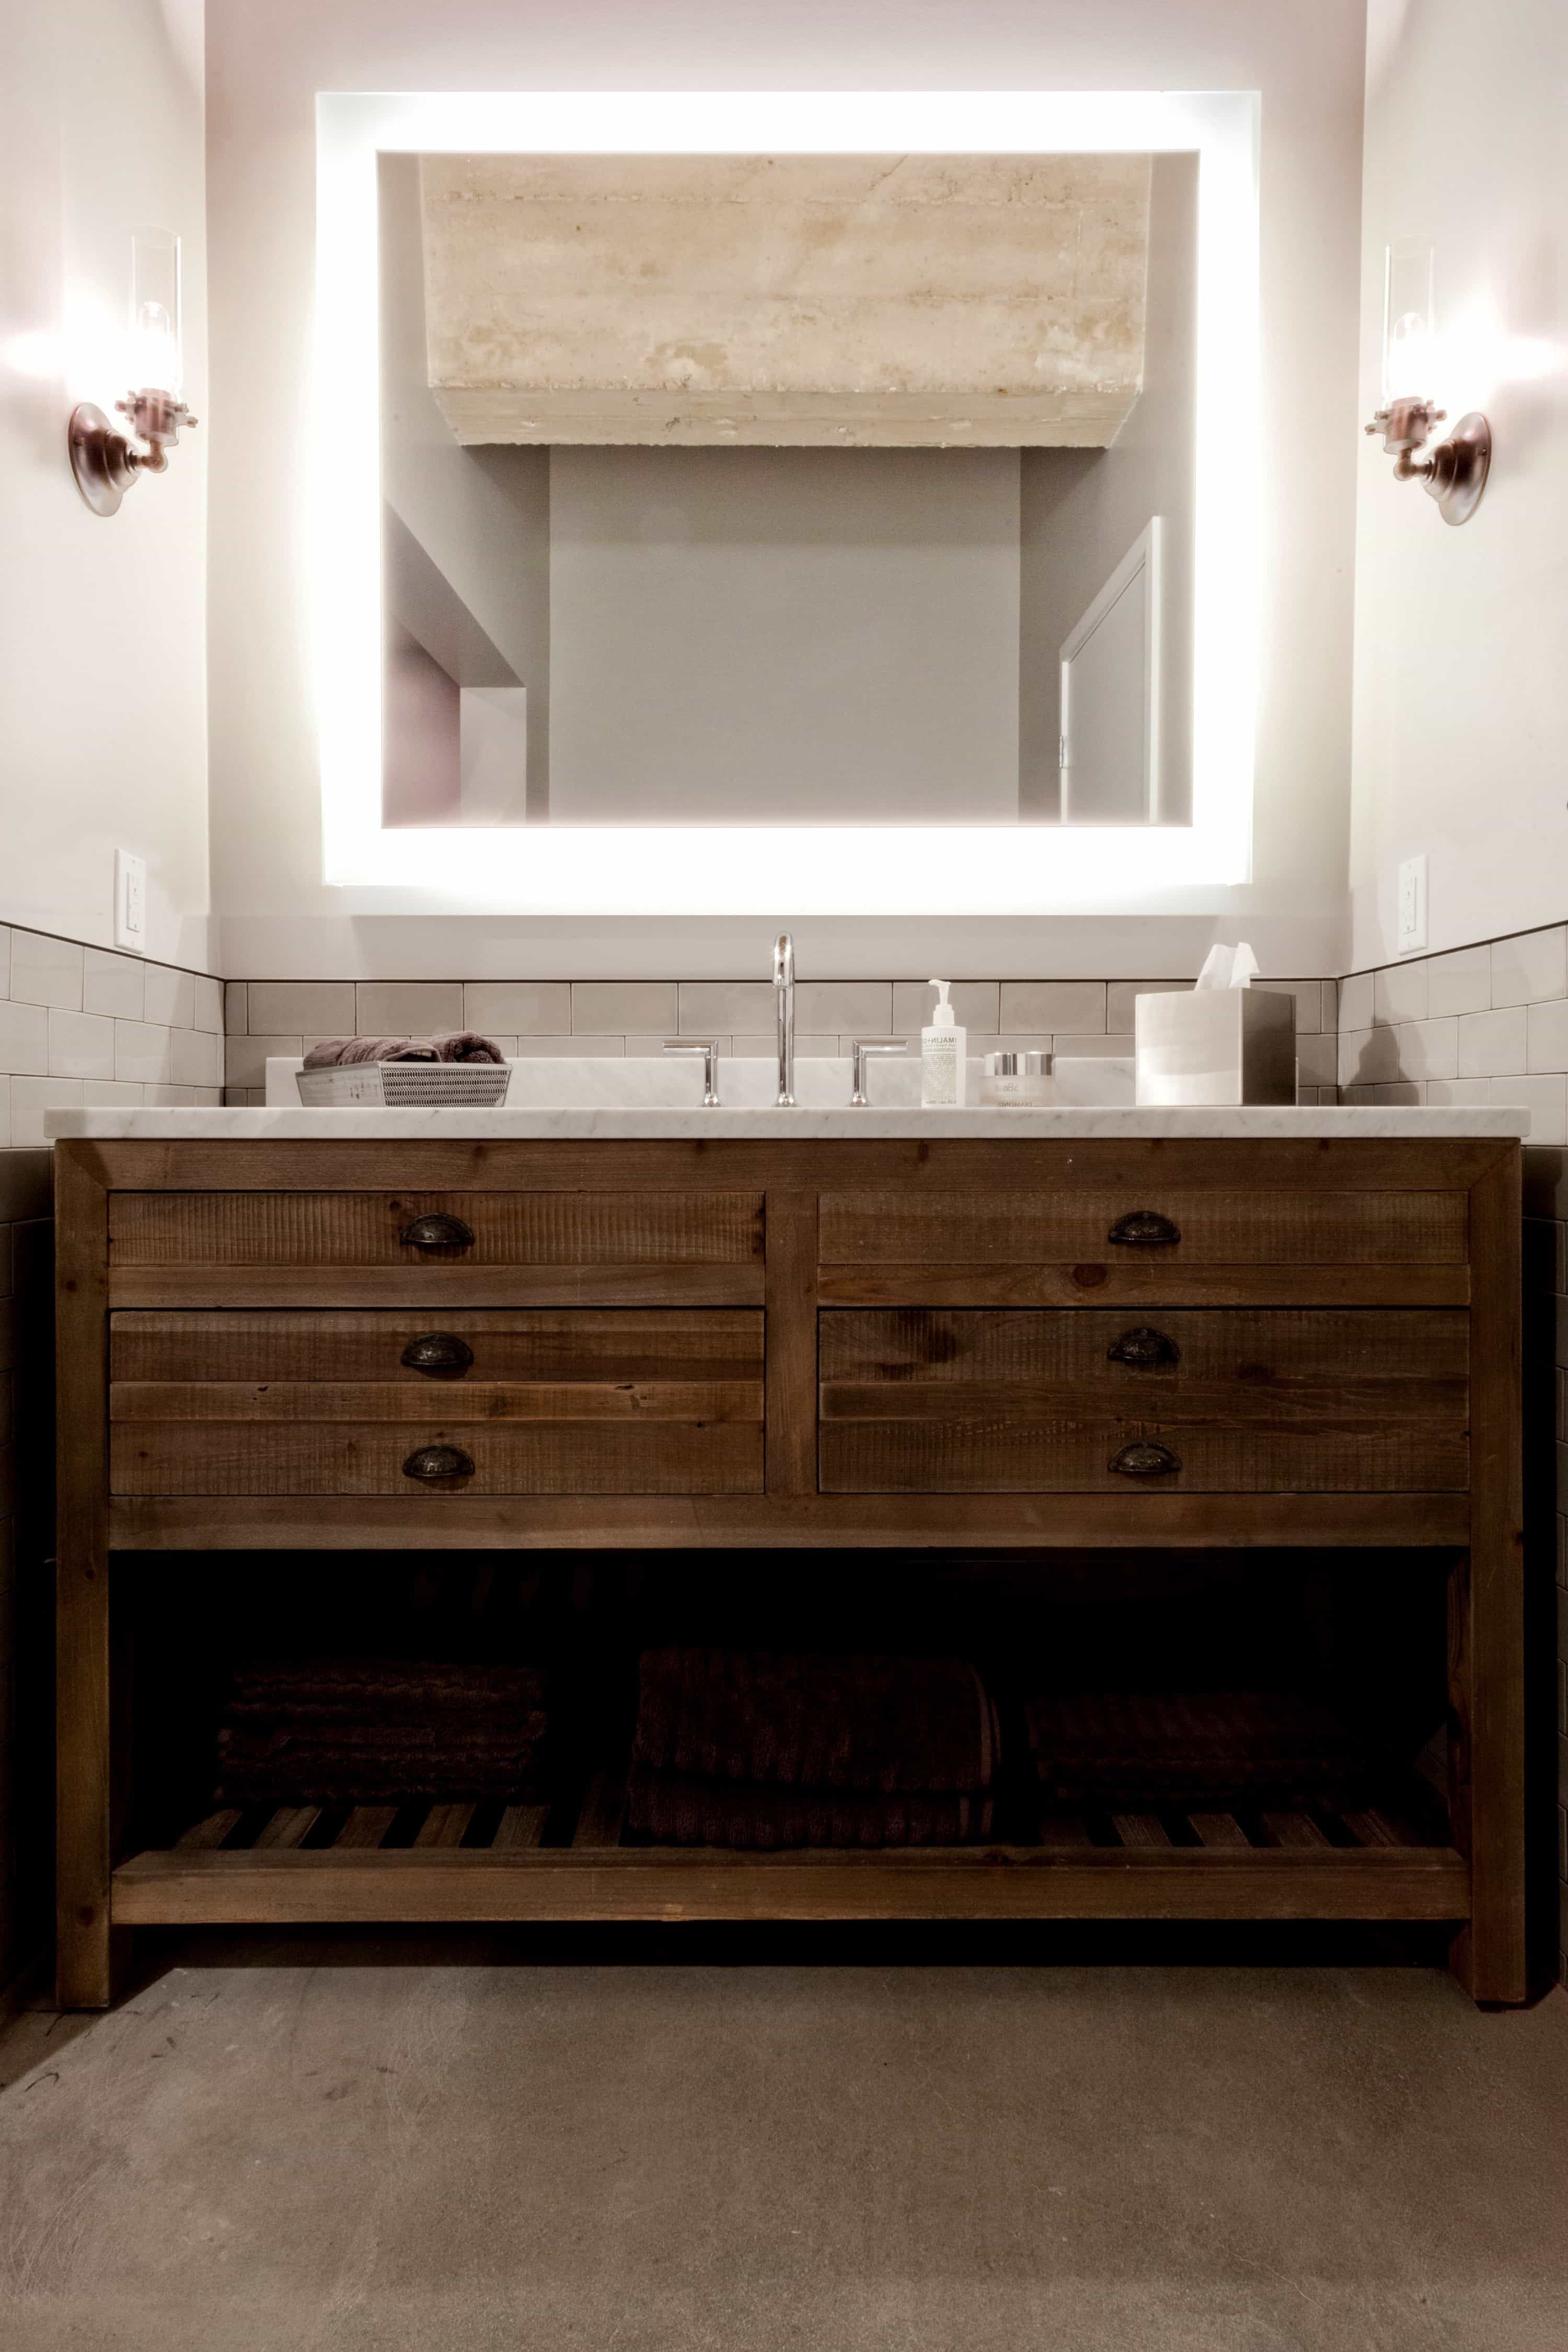 Illuminated Bathroom Mirror And Dresser Style Vanity (View 2 of 8)